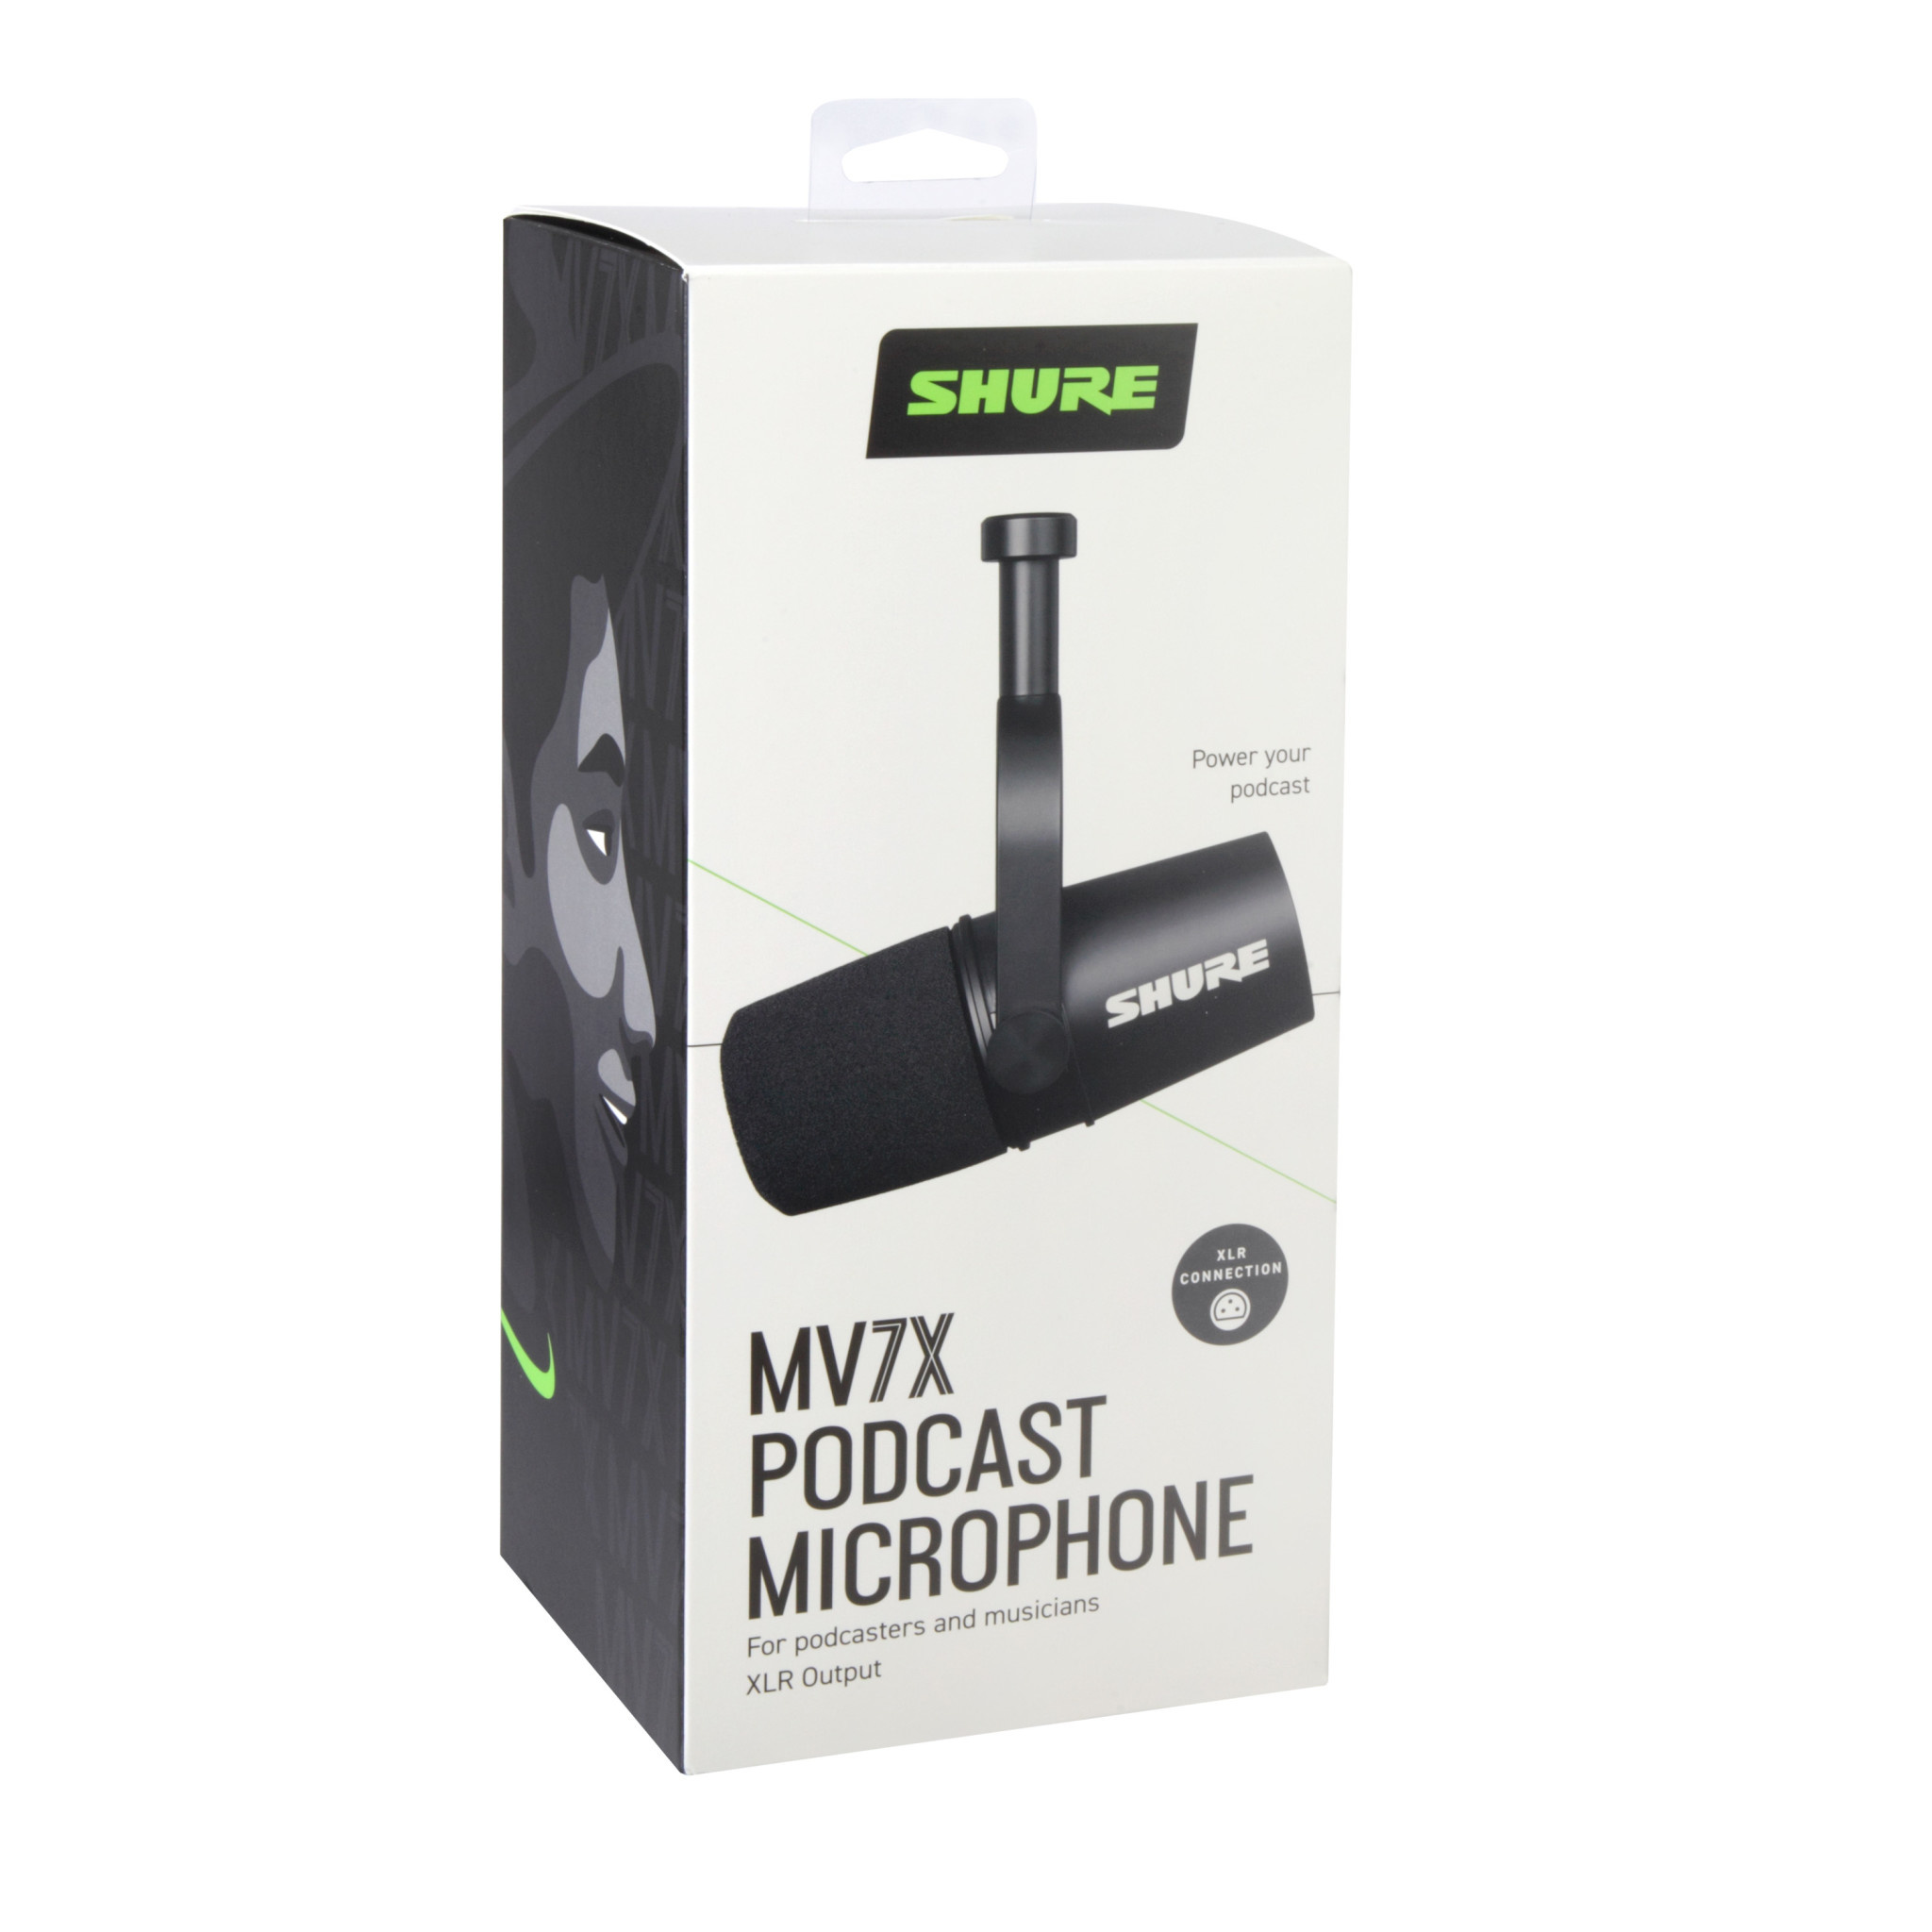 Shure MV7X Recording & Podcasting Microphone, Black - Janzen